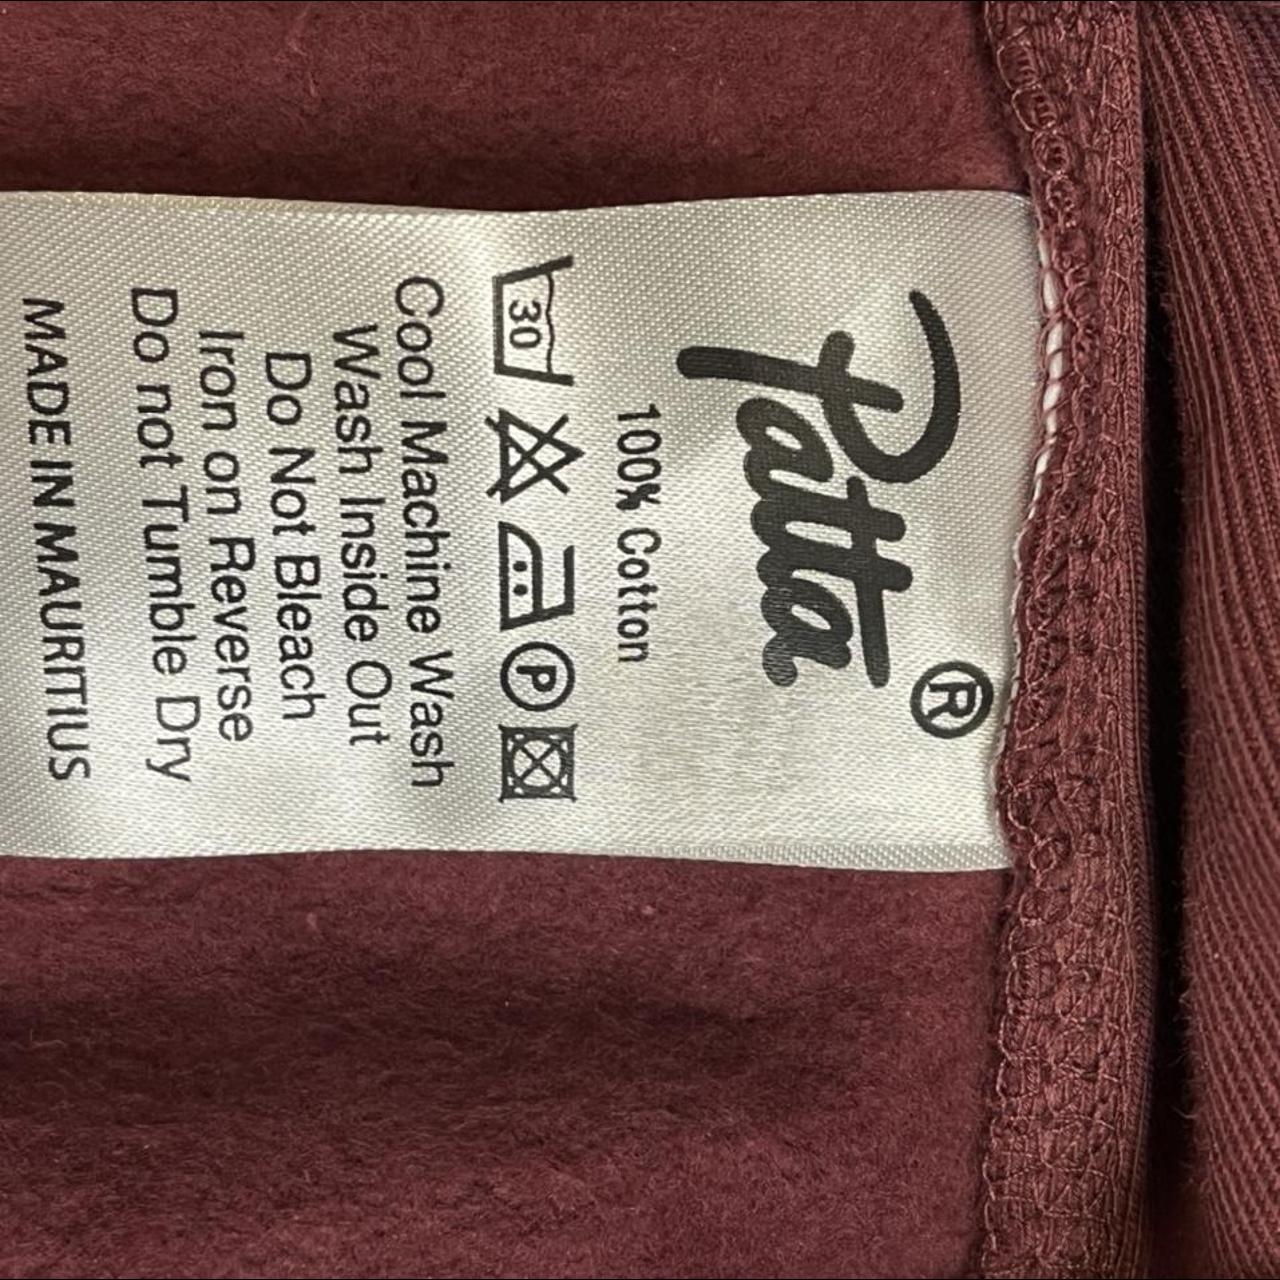 Product Image 3 - Patta hoodie size Medium
Brand New,